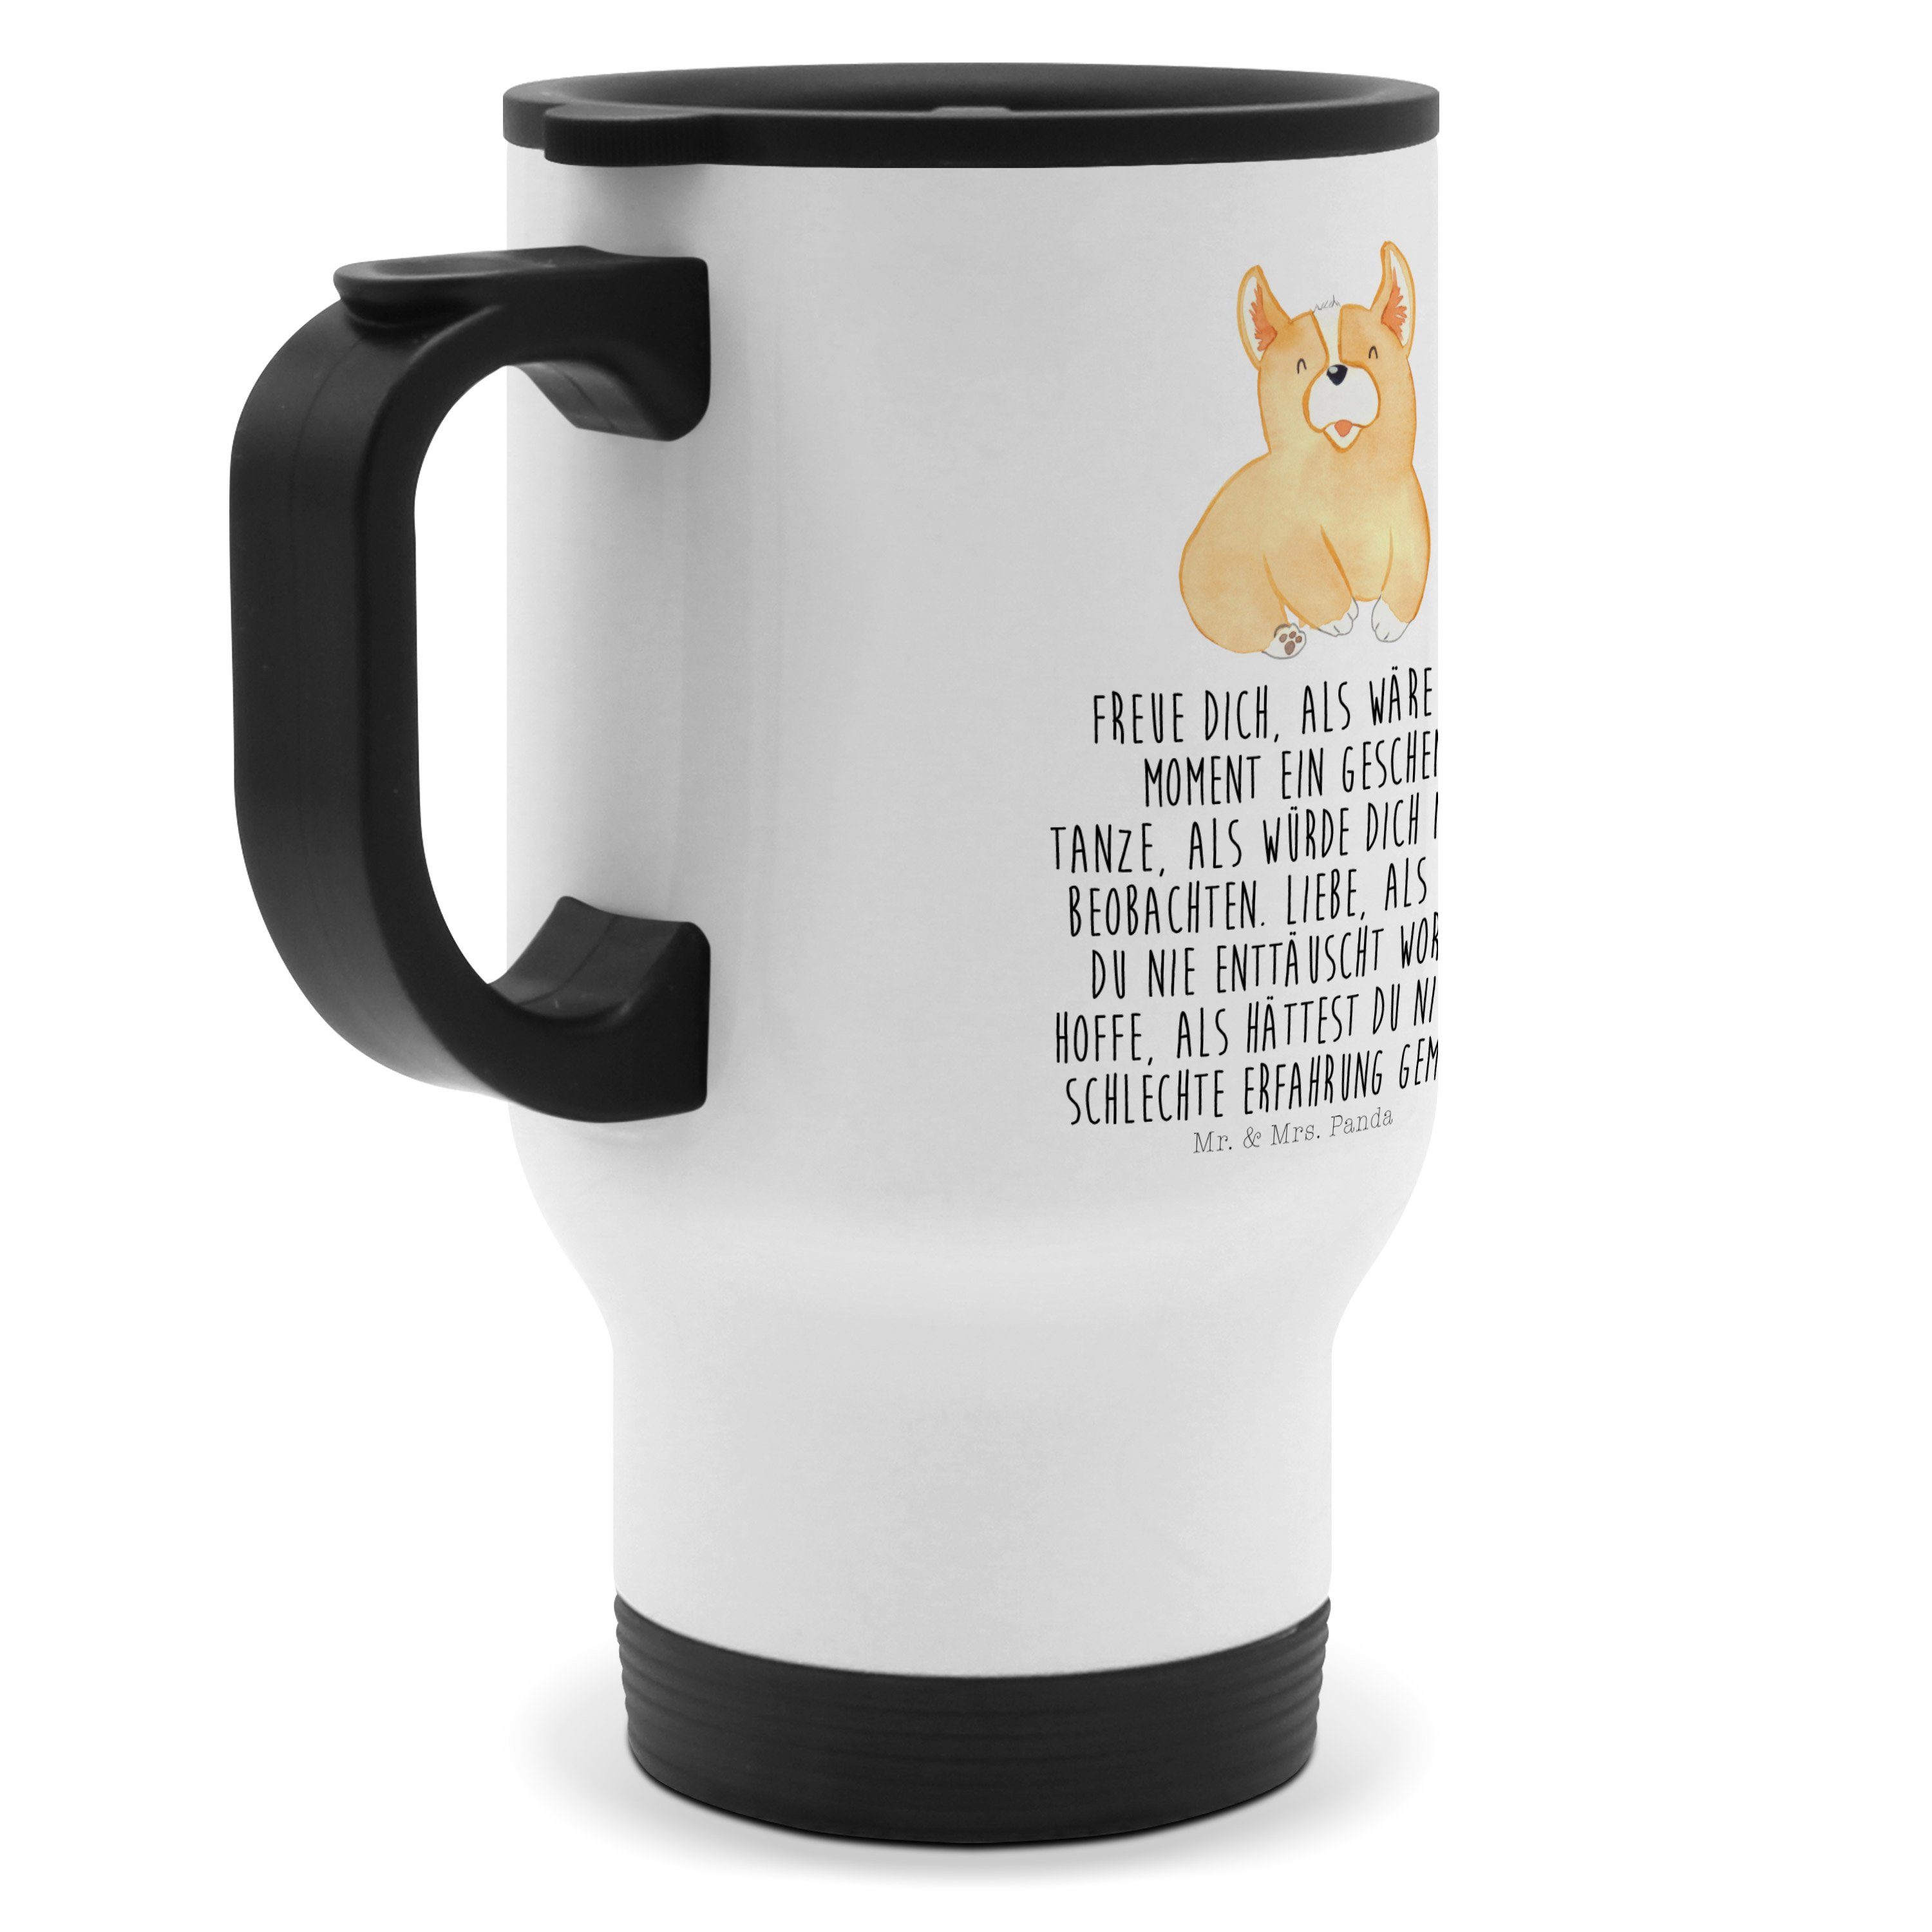 Mr. & Mrs. Edelstahl Tasse Weiß Thermobecher Panda mit - Geschenk, Kaffeetass, Deckel, - Corgie Hundebesitzer